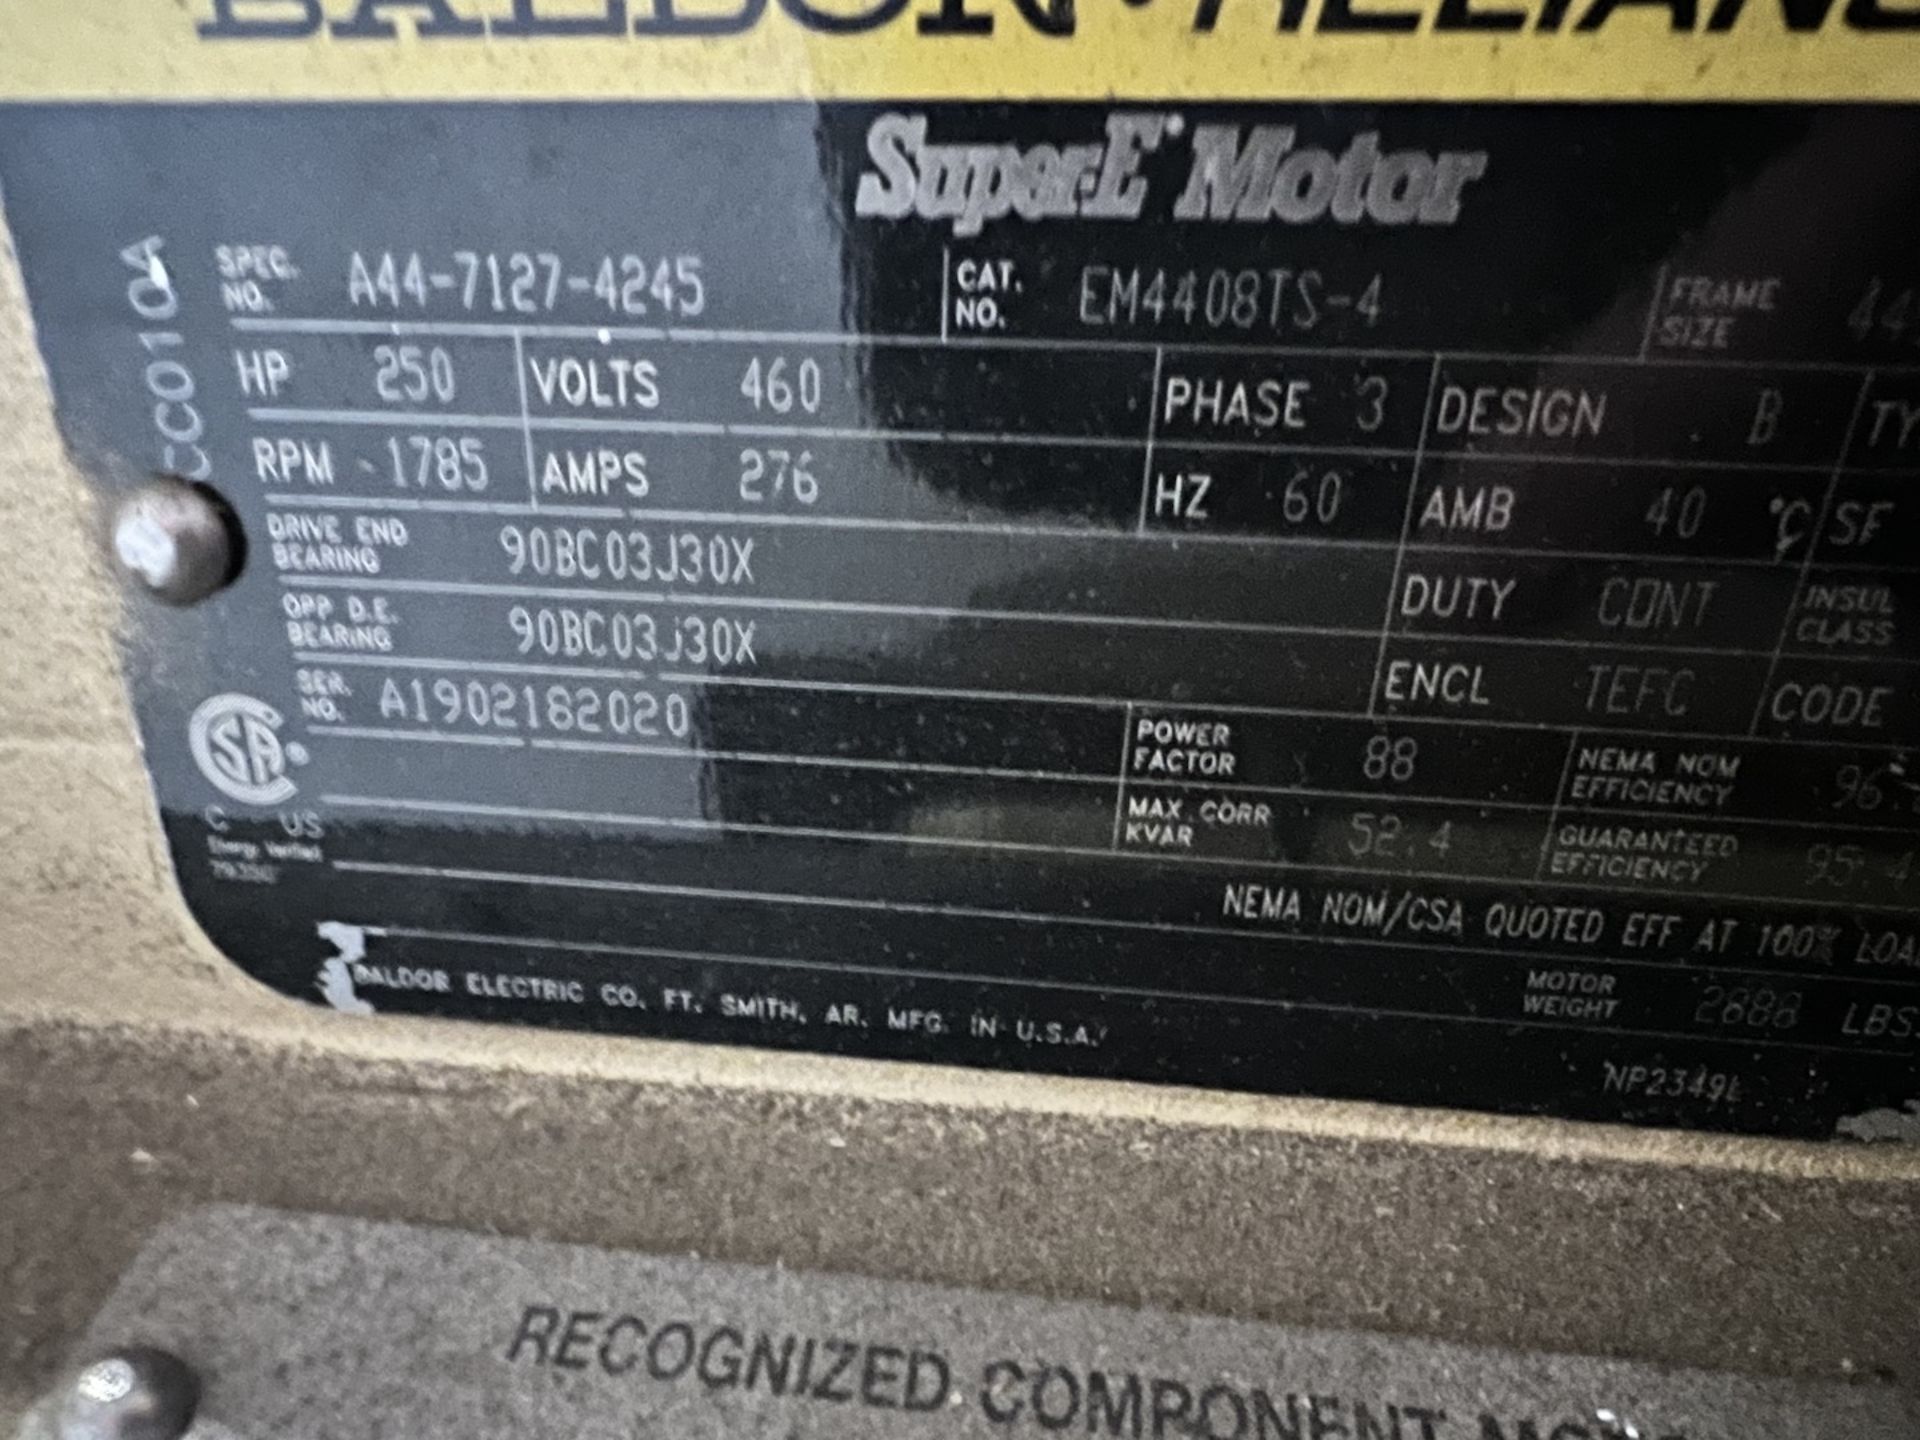 BALDOR RELIANCE 250-HP MOTOR, 1785 RPM, 460 V (SIMPLE LOADING FEE $110) - Image 5 of 6